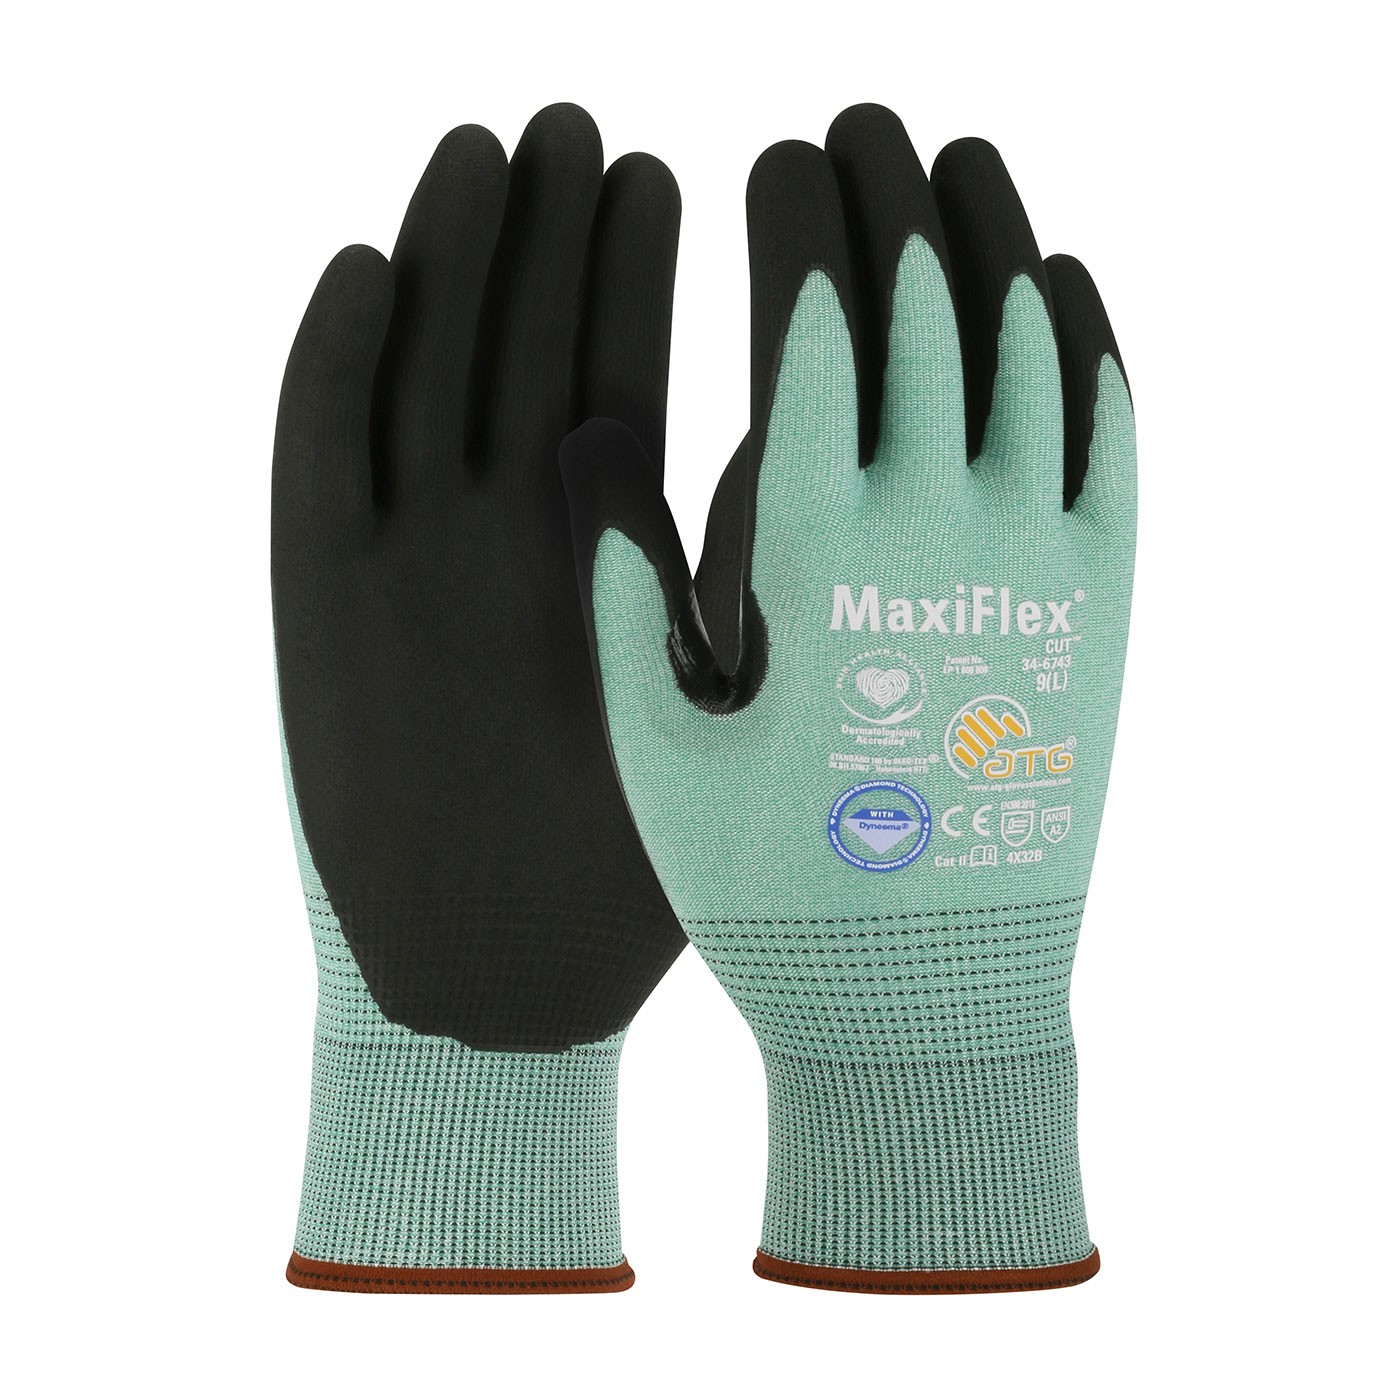 MaxiFlex® Cut™ Seamless Knit Dyneema® Diamond Blended Glove with Premium Nitrile Coated MicroFoam Grip on Palm & Fingers (#34-6743)